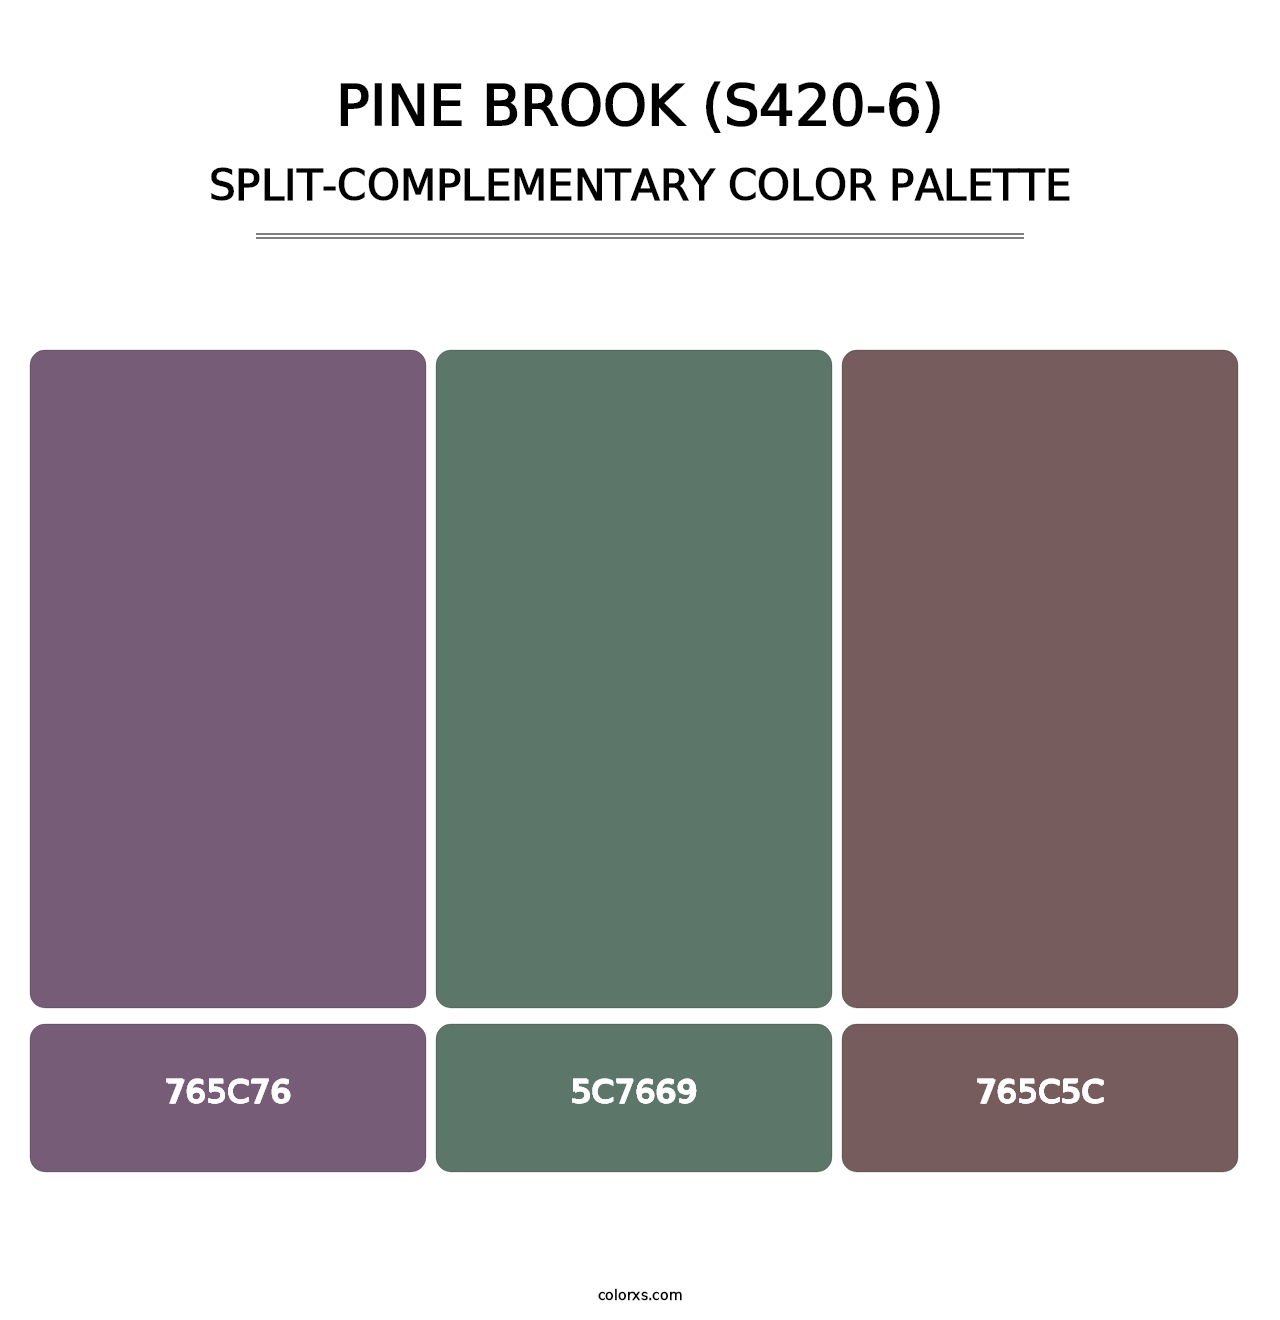 Pine Brook (S420-6) - Split-Complementary Color Palette